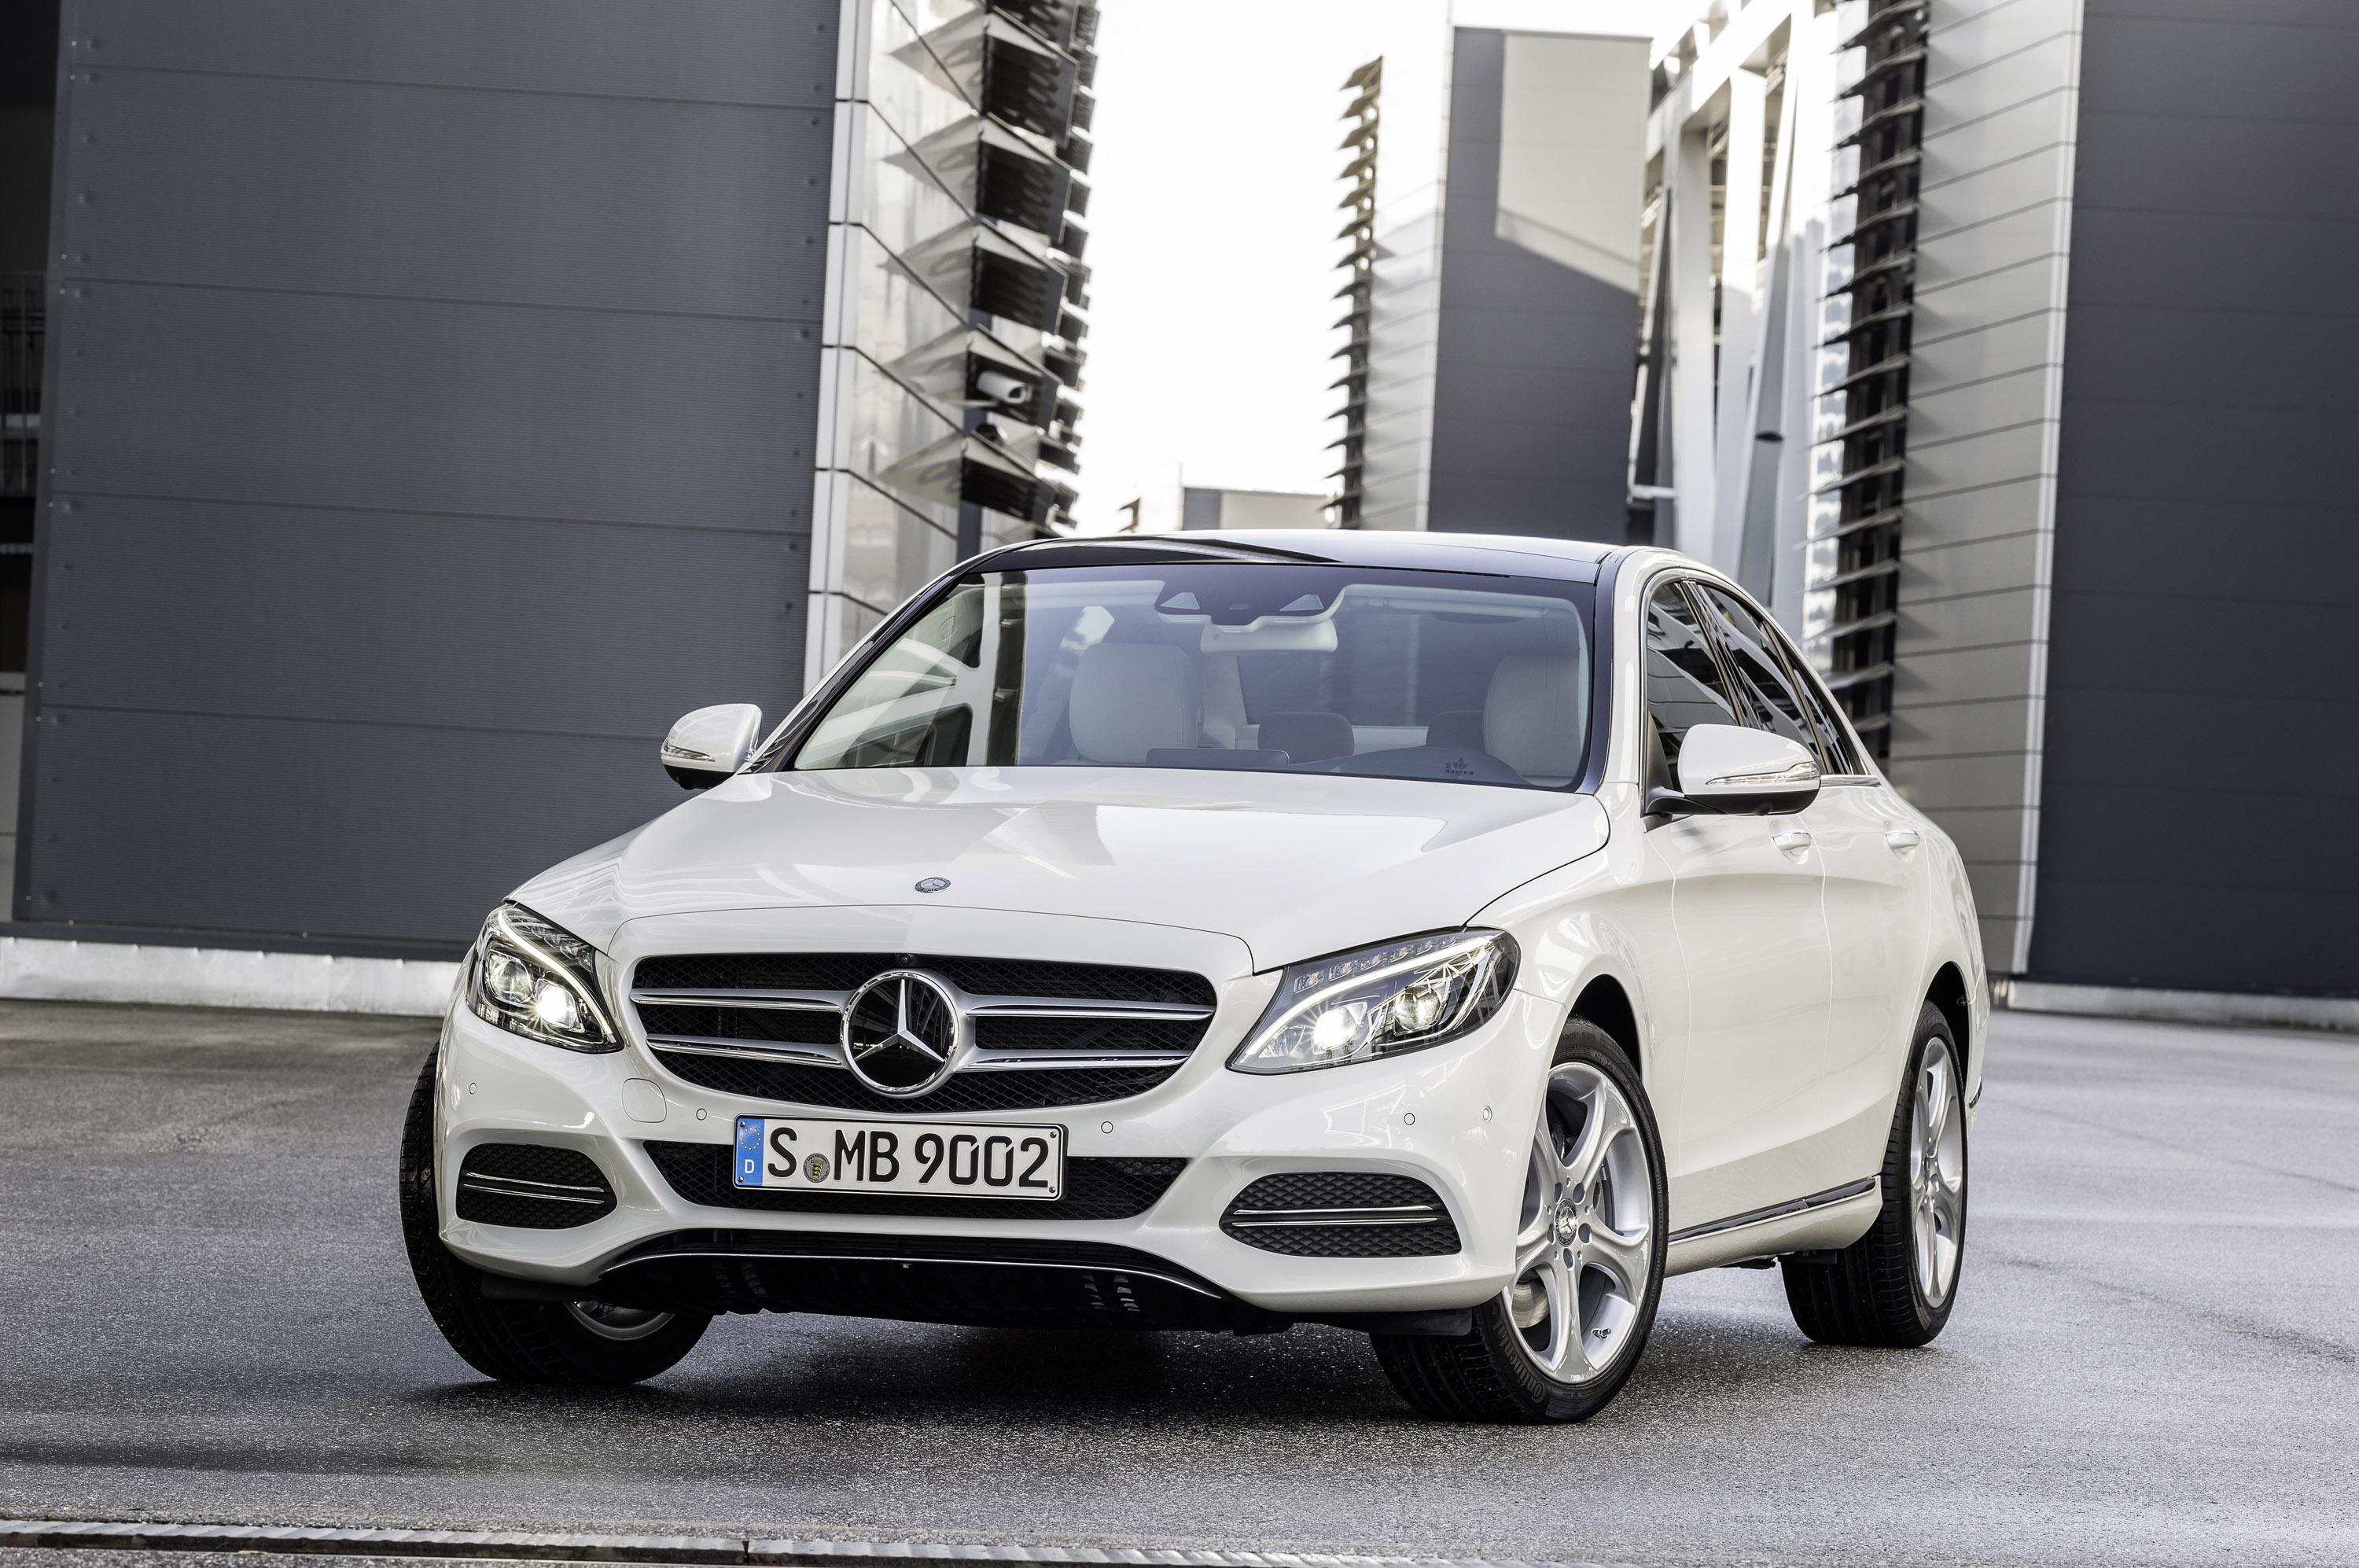 2015 Mercedes-Benz C-Class Sedan US Pricing Announced